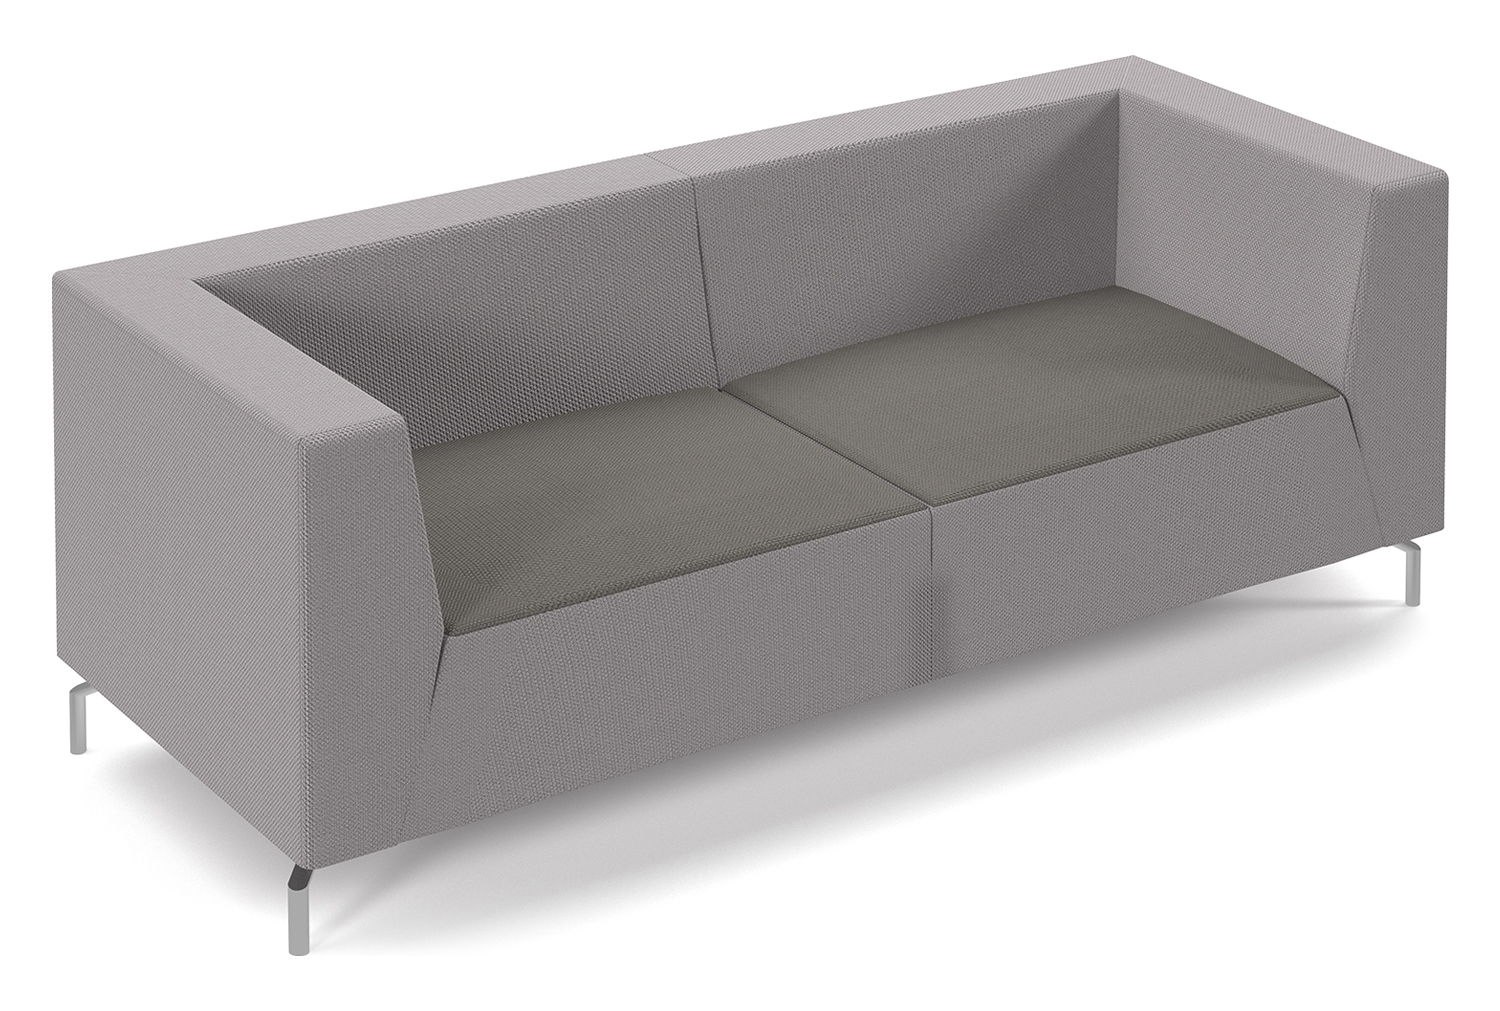 Plato 2 Tone Fabric Low Three Seater Sofa, Present Grey Seat/Forecast Grey Back, Fully Installed